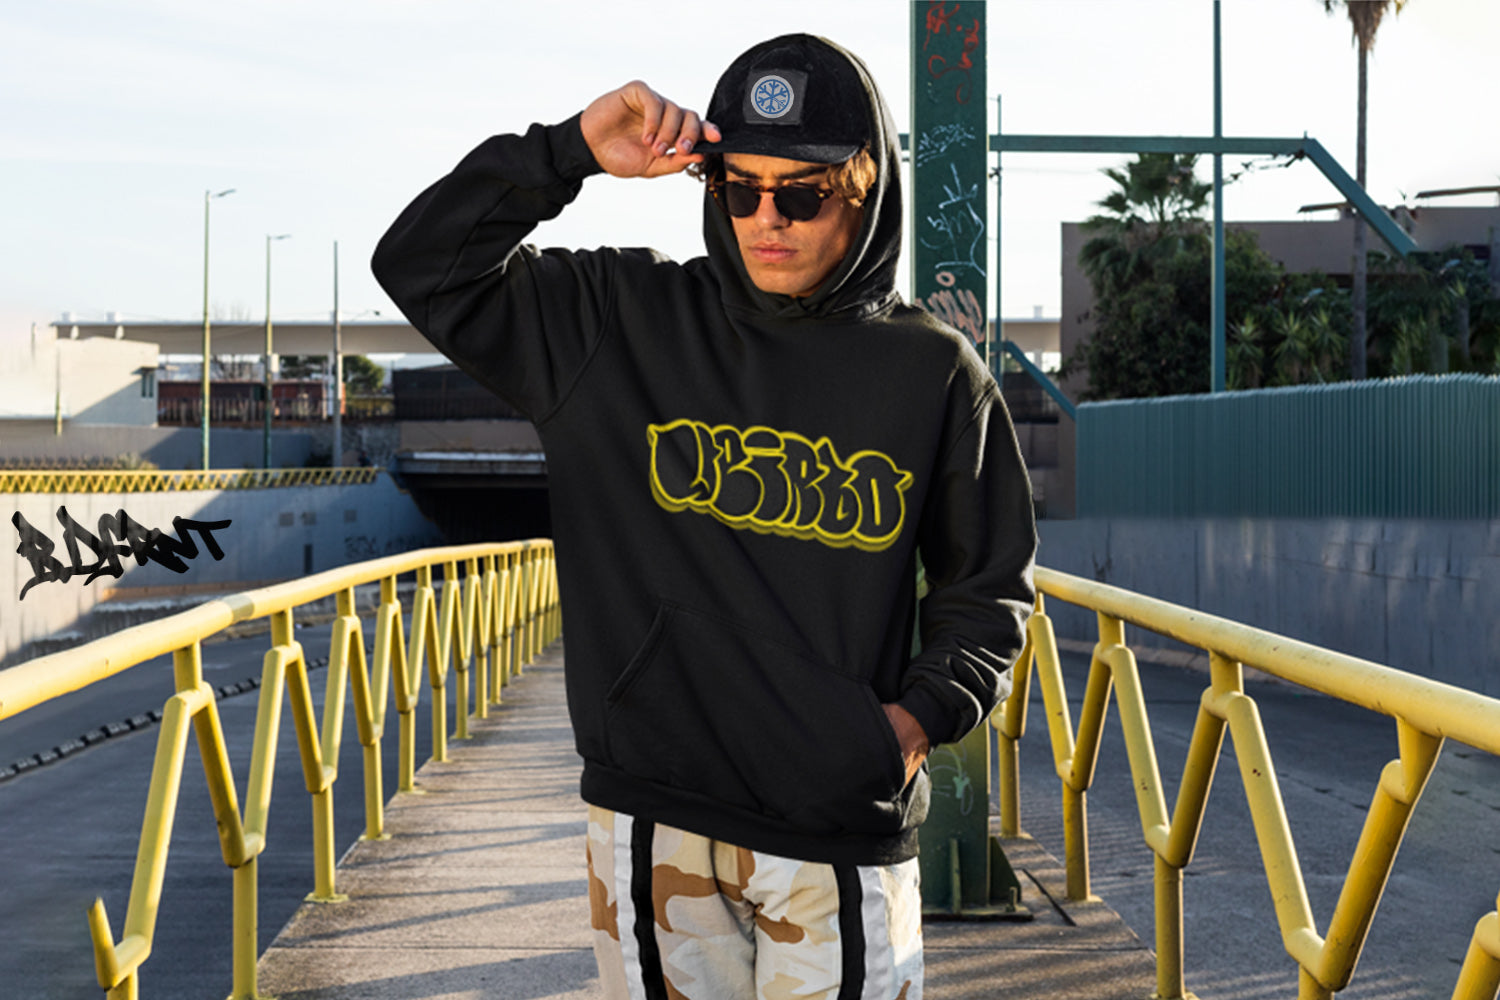 weirdo throwie hoodie b.different clothing graffiti street art inspired streetwear